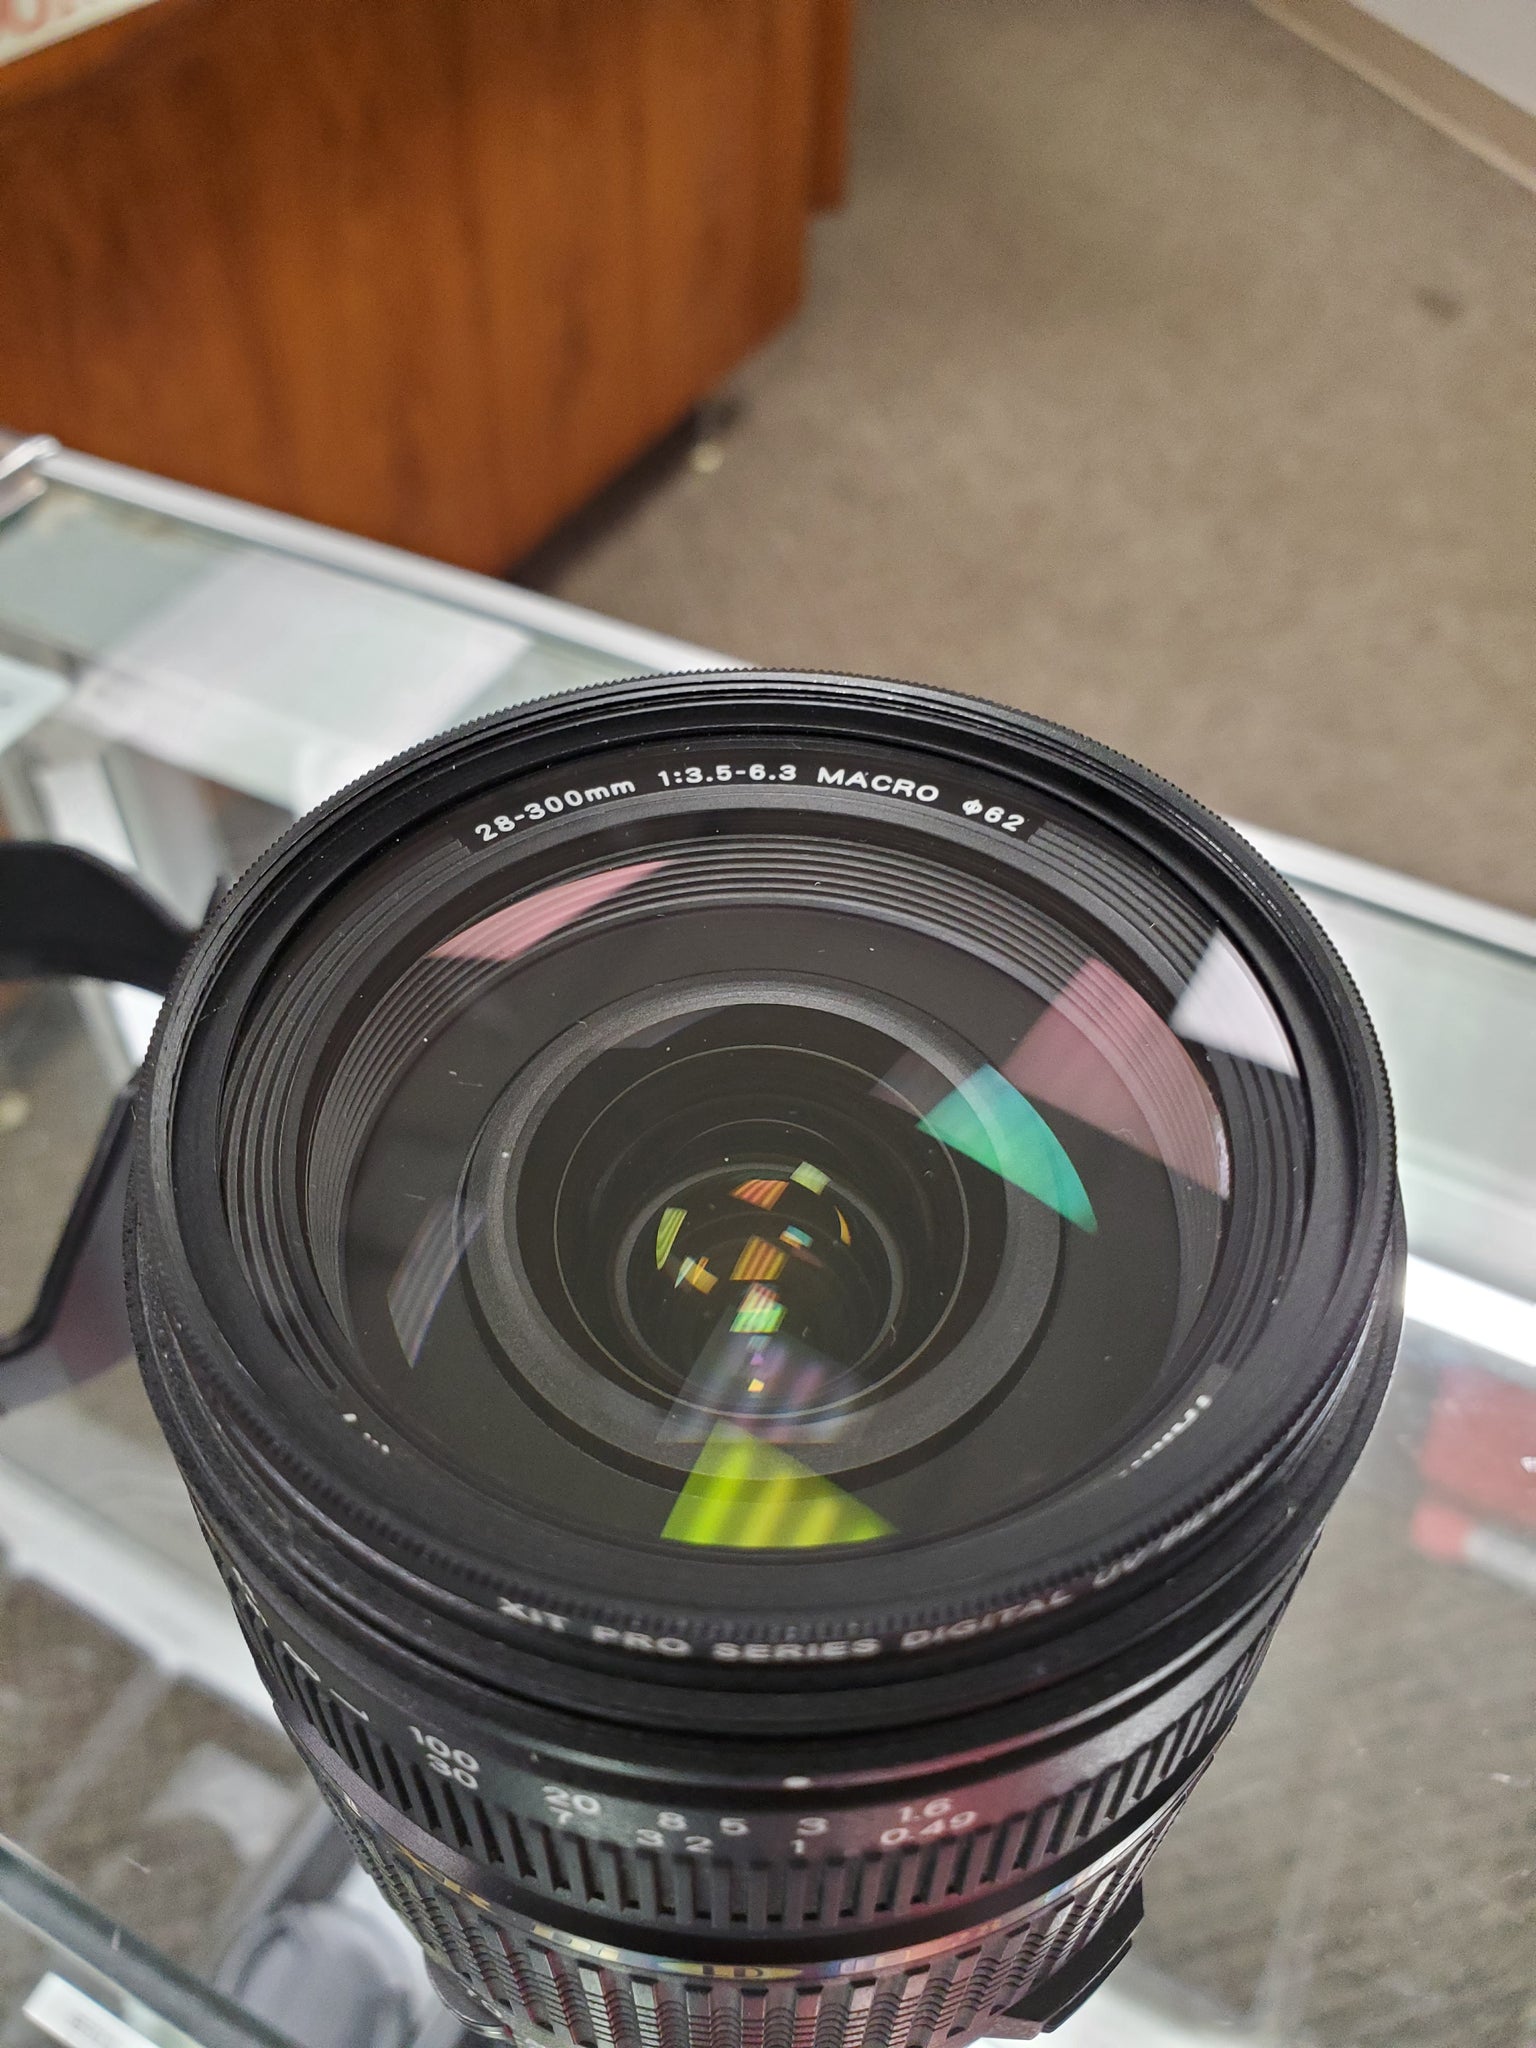 Tamron AF 28-300mm f/3.5-6.3 XR Di LD Aspherical (IF) Macro Lens